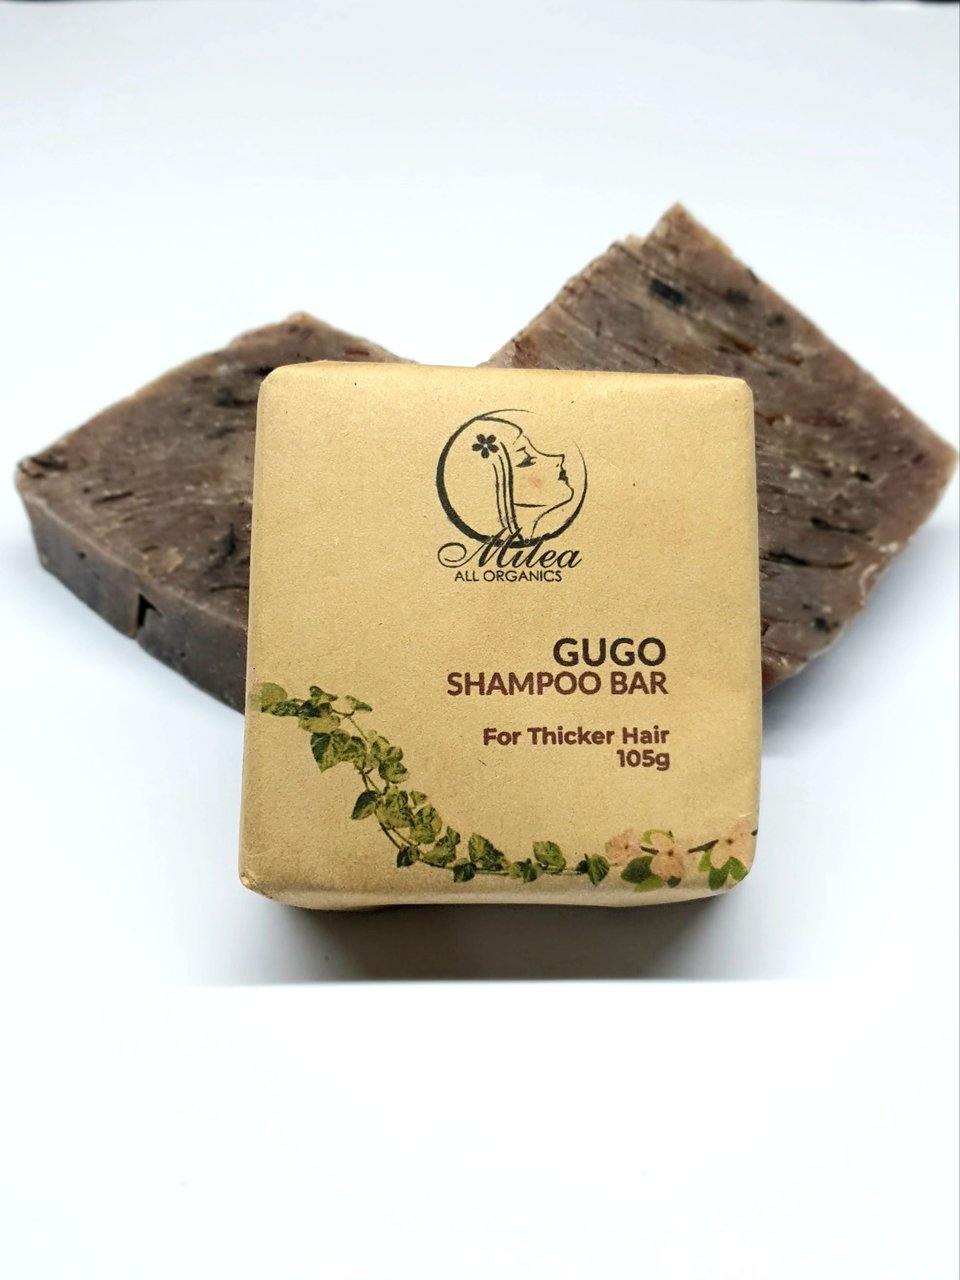 Gugo Shampoo Bar - Milea All Organics - Philippines